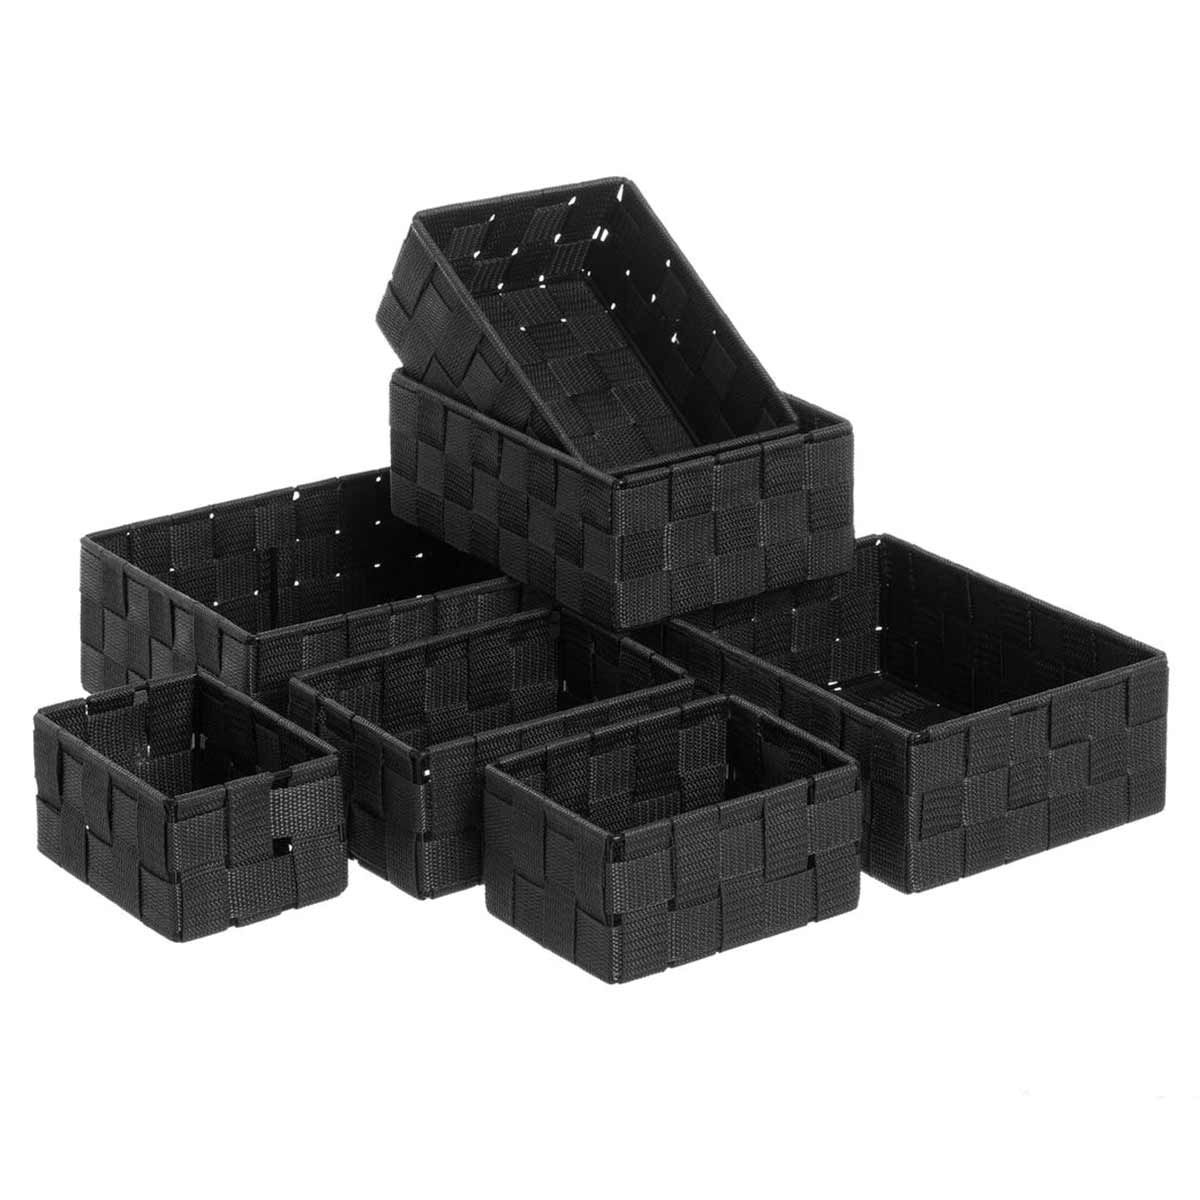 Set of 7 decorative baskets - Black